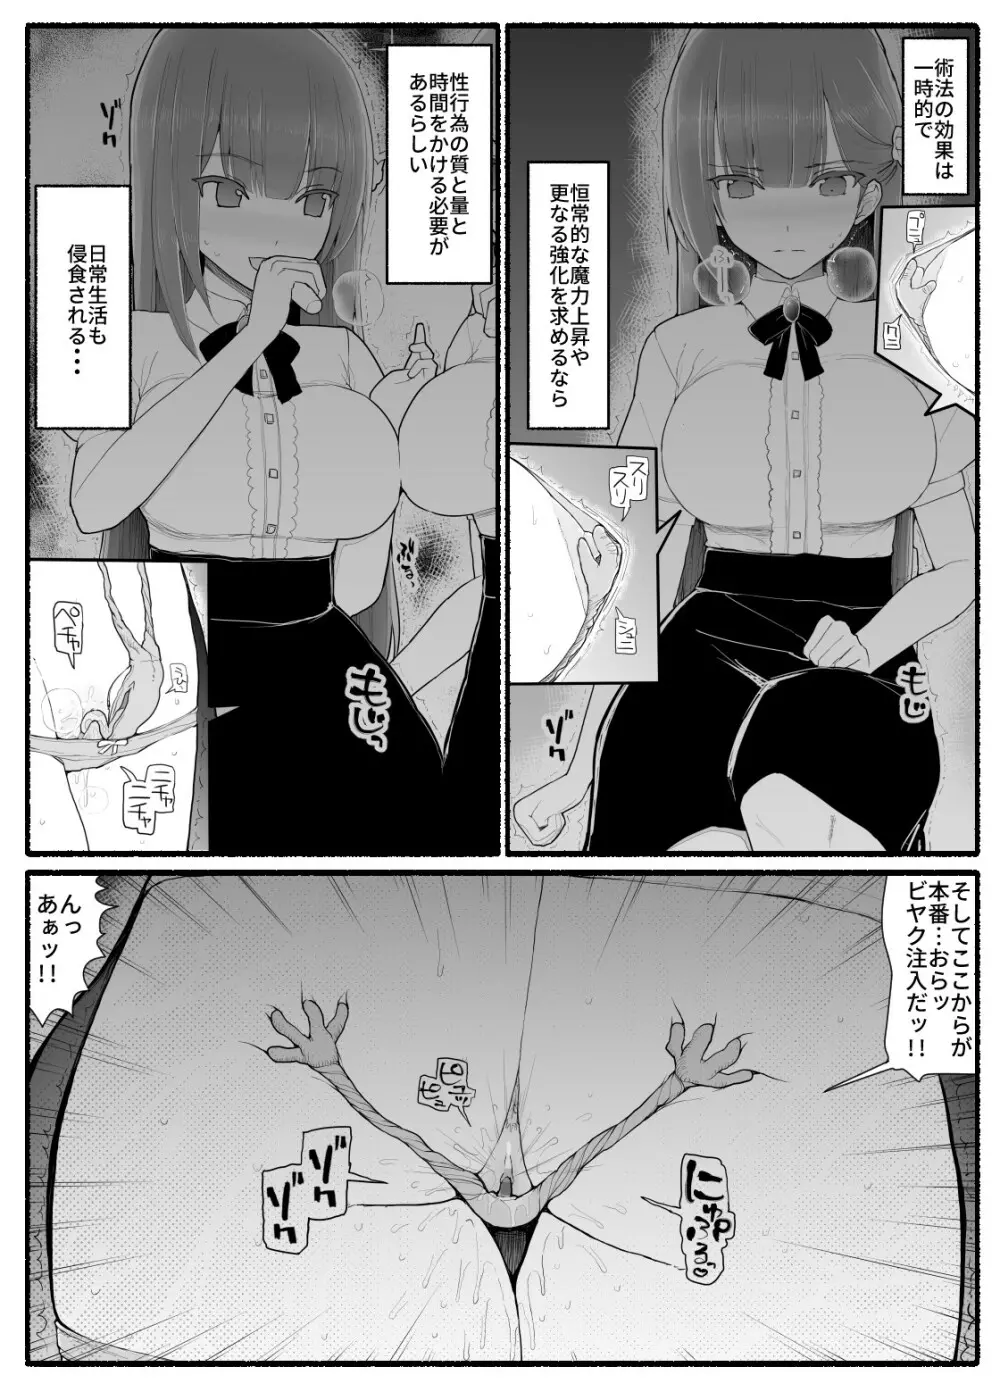 魔法少女vs淫魔生物 15 16ページ